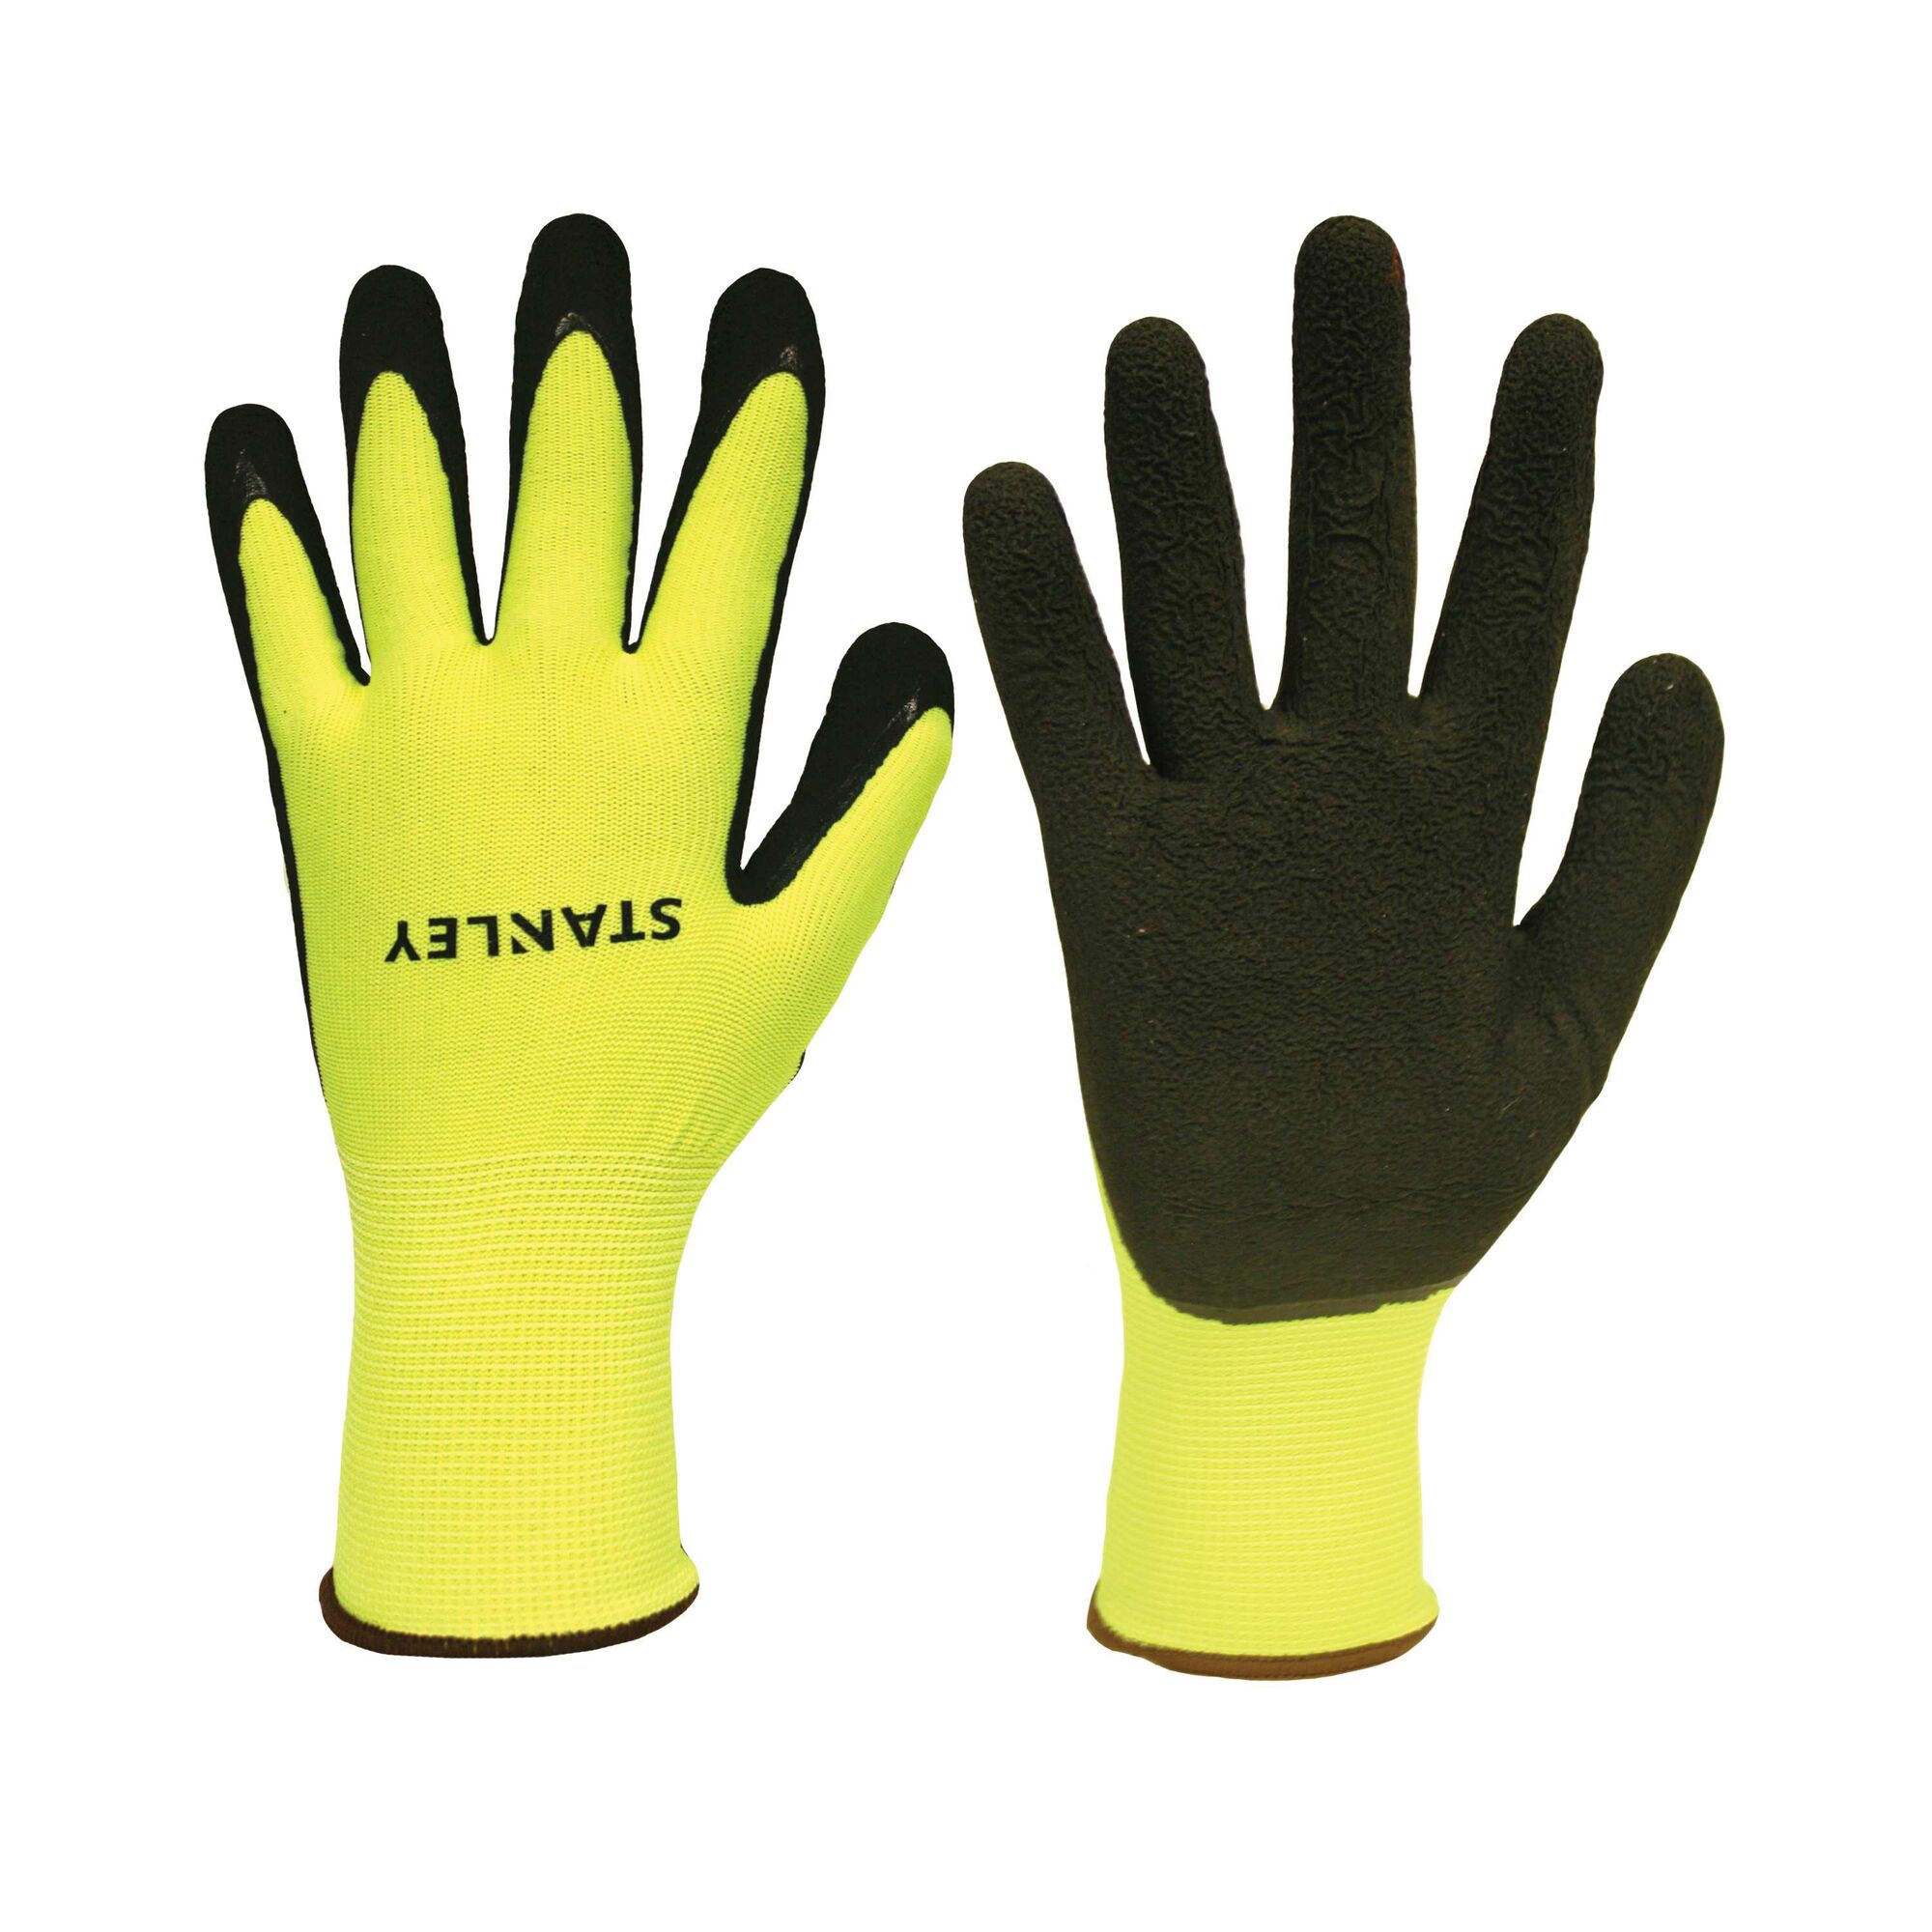 Stanley High Visibility Latex Coated Grip Gripper Work Safety Gloves Hi Viz Vis 